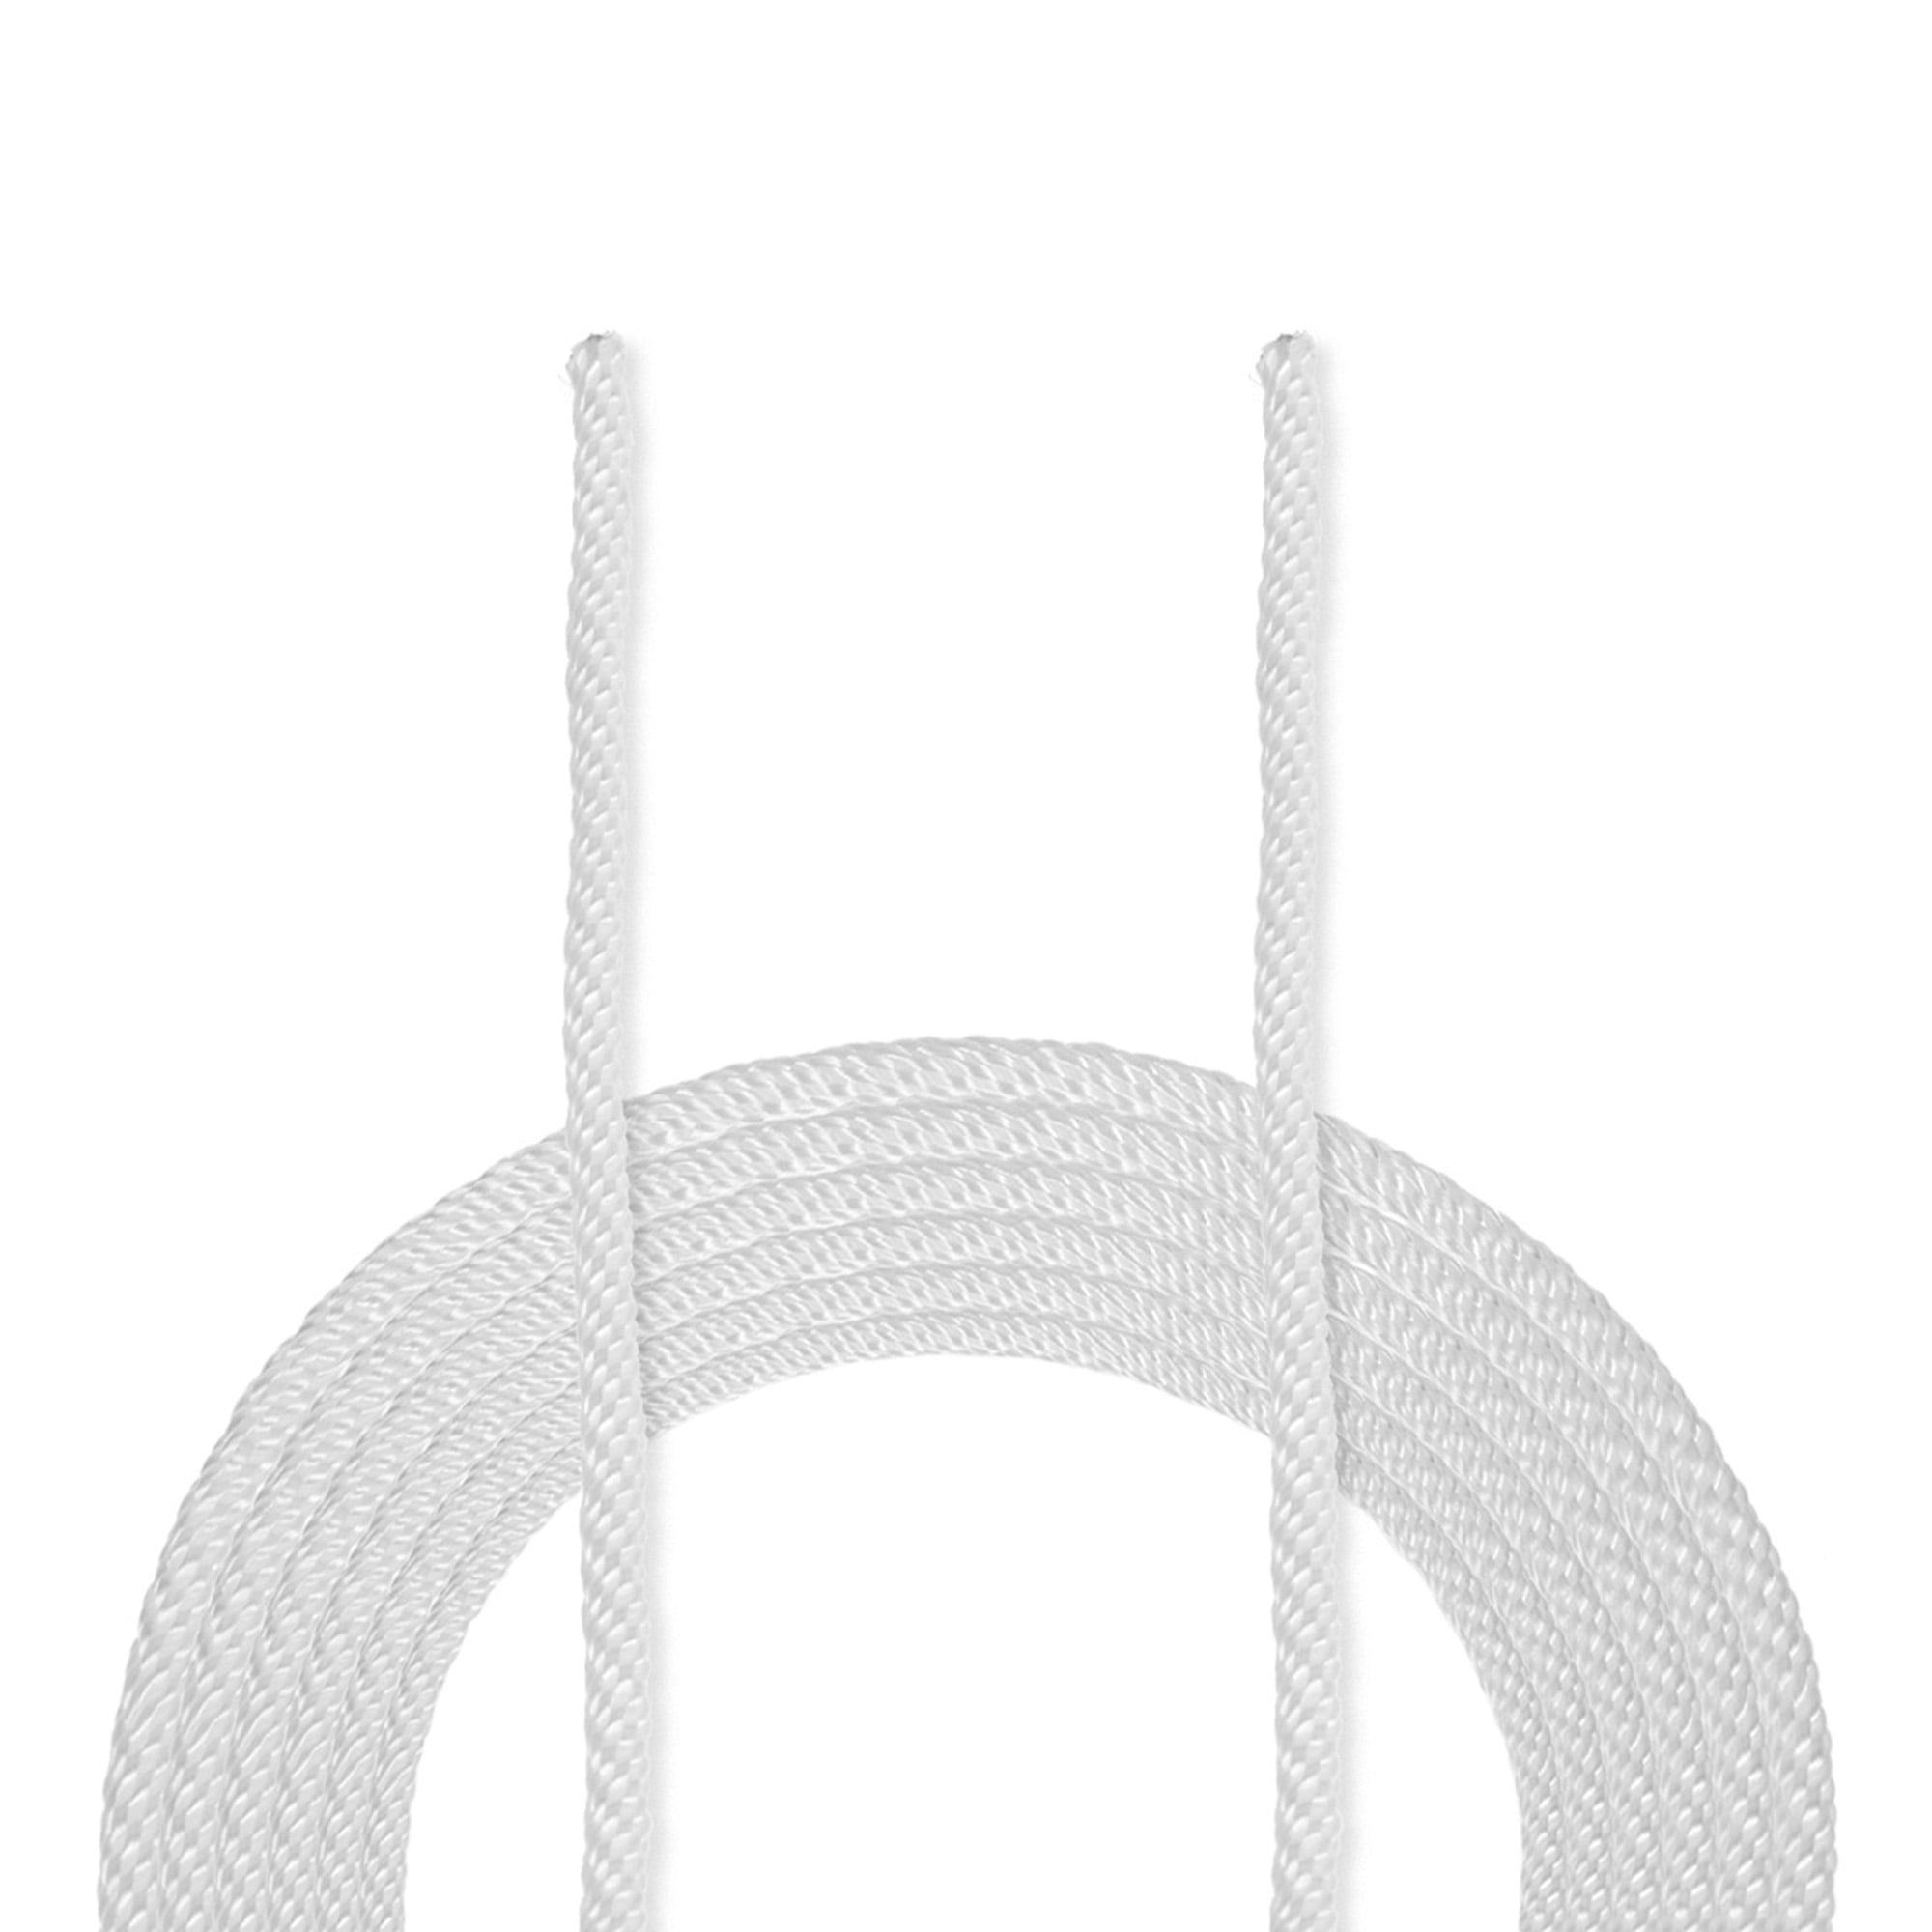 4mm x 3m Nylon Pull Starter Recoil Start Cord Rope Kit For Lawnmower Chainsaw 